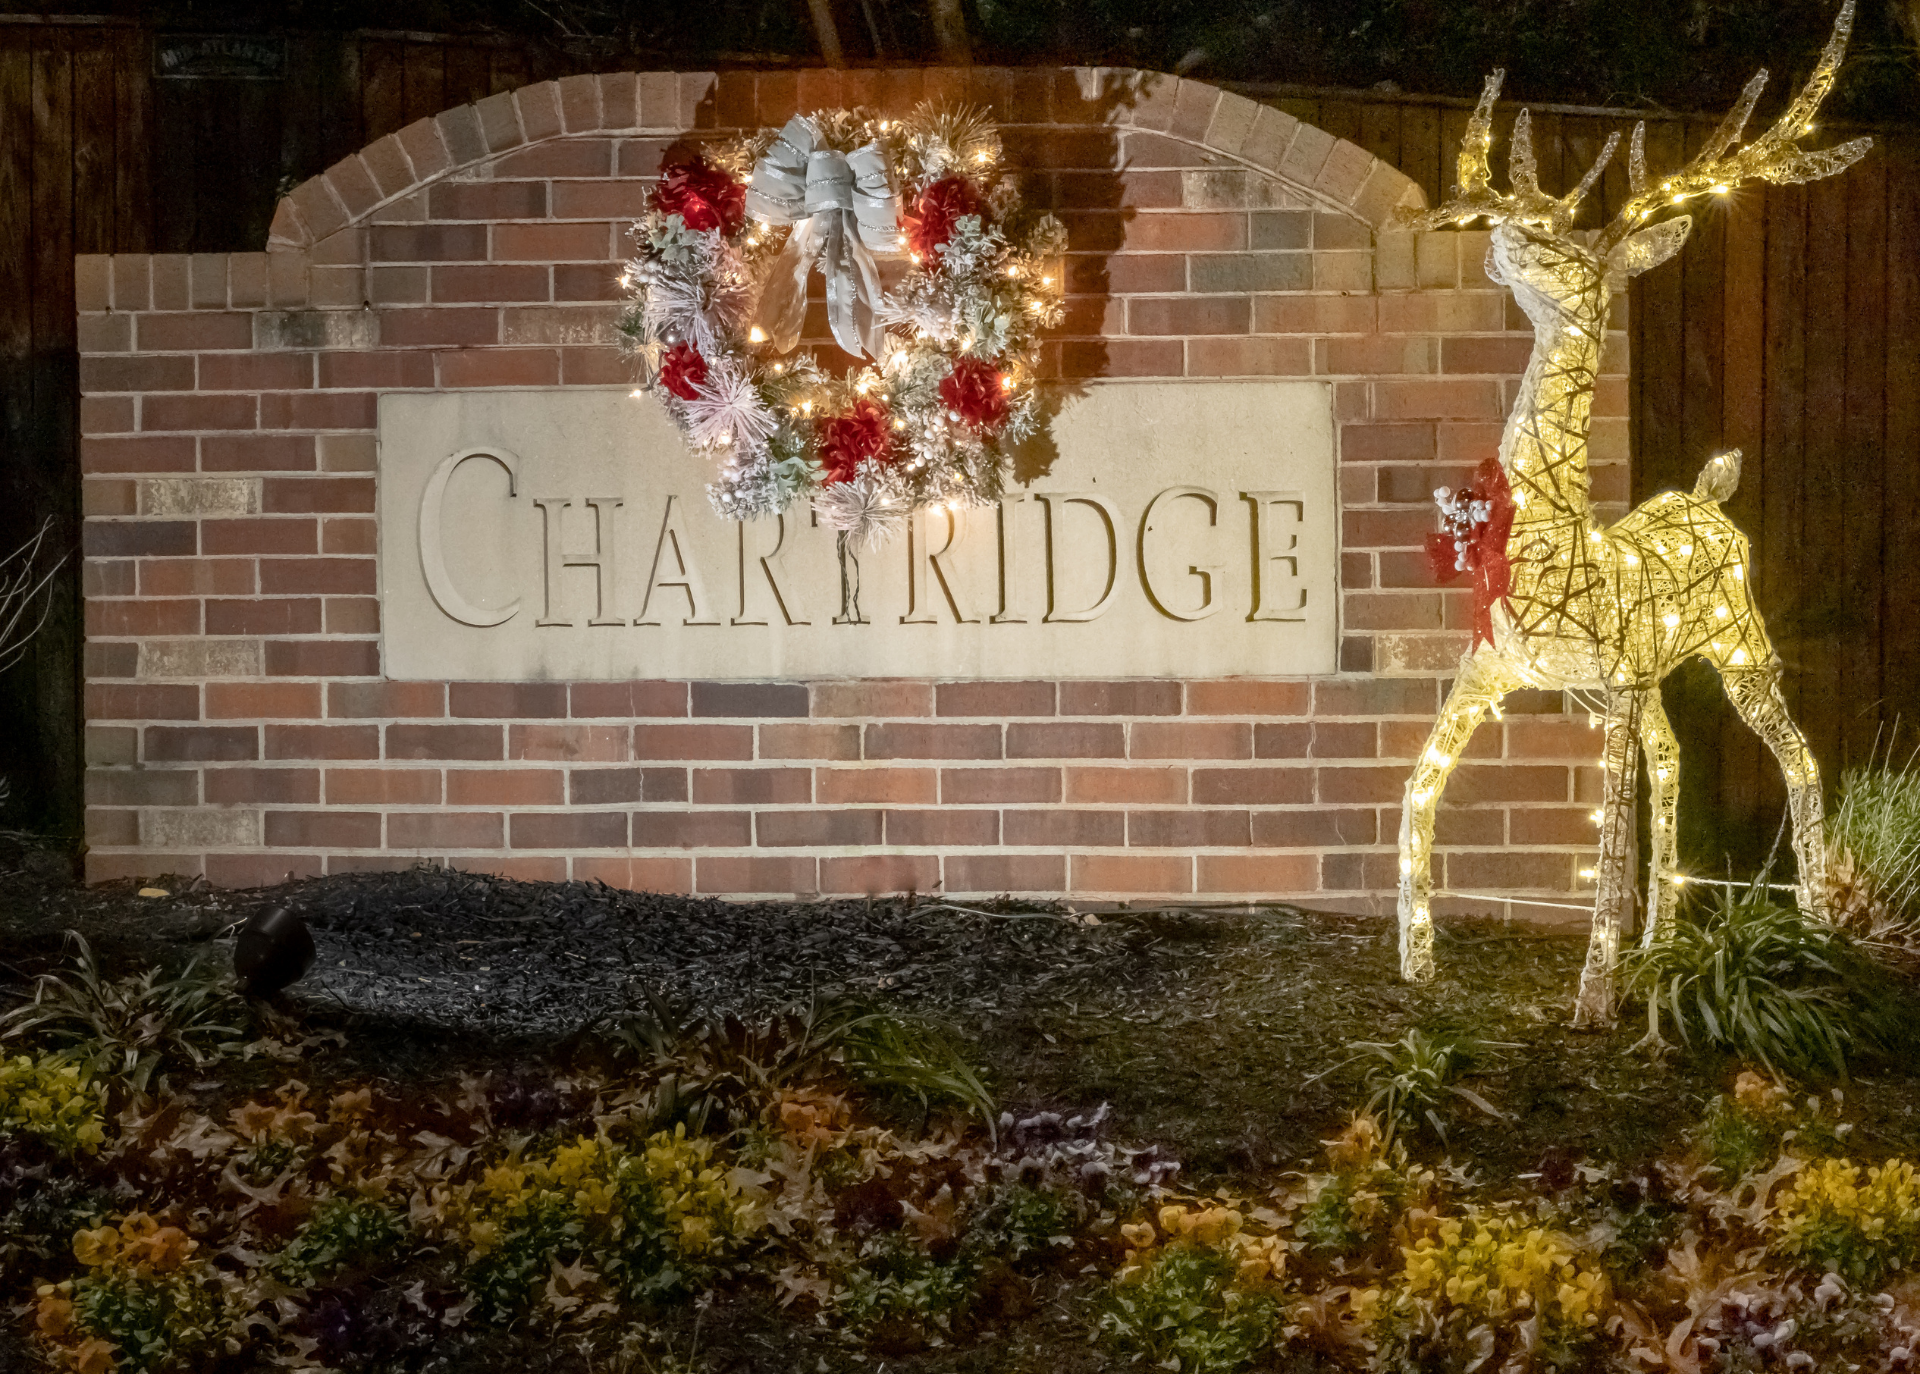 A Chartridge Christmas